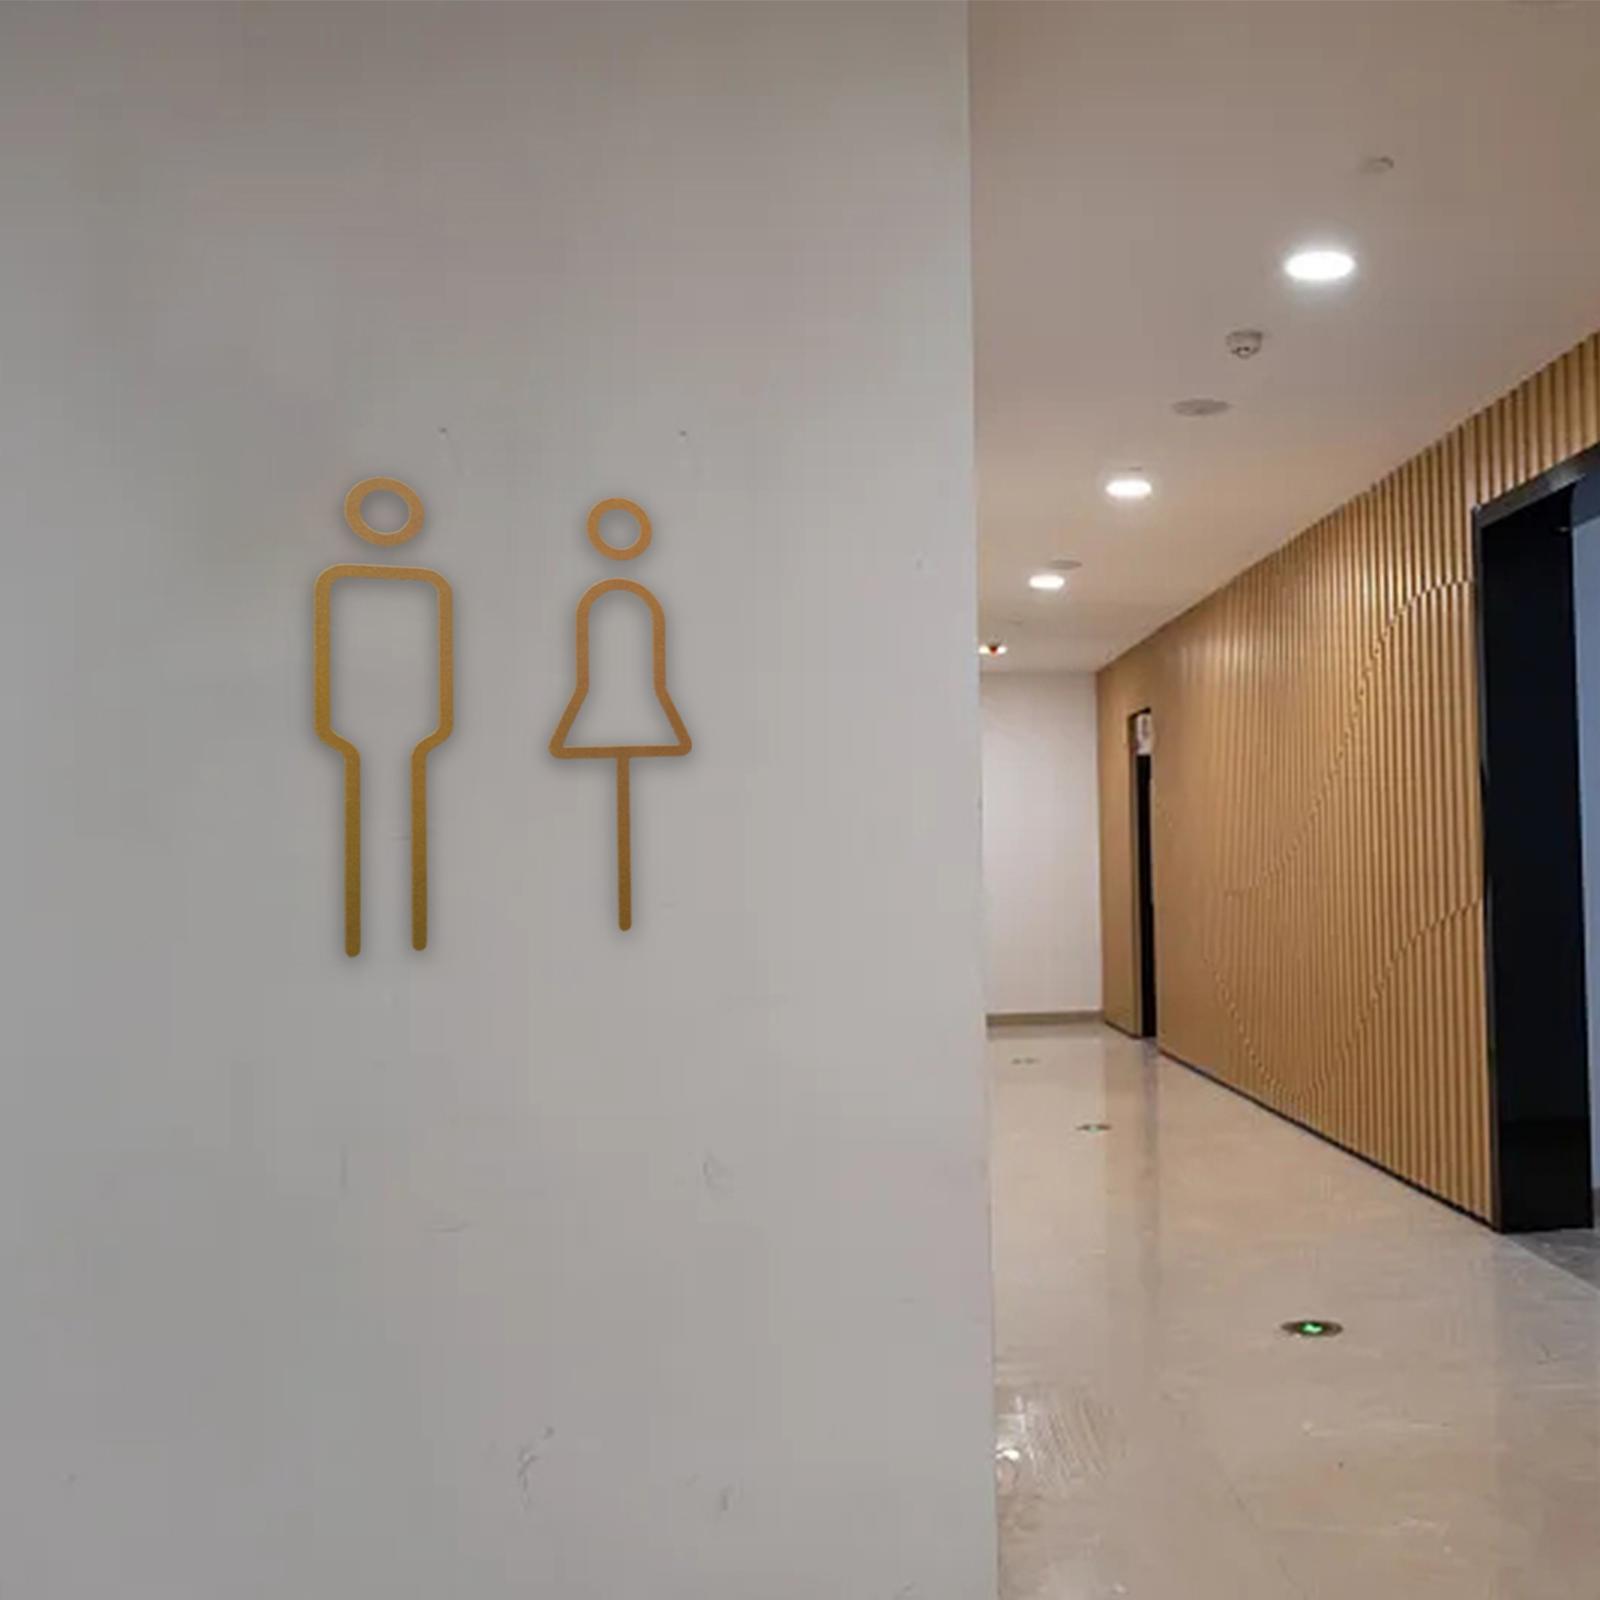 Men Women Toilet Sign Loo Lightweight Toilet Symbol Sign for Parks Bar Store